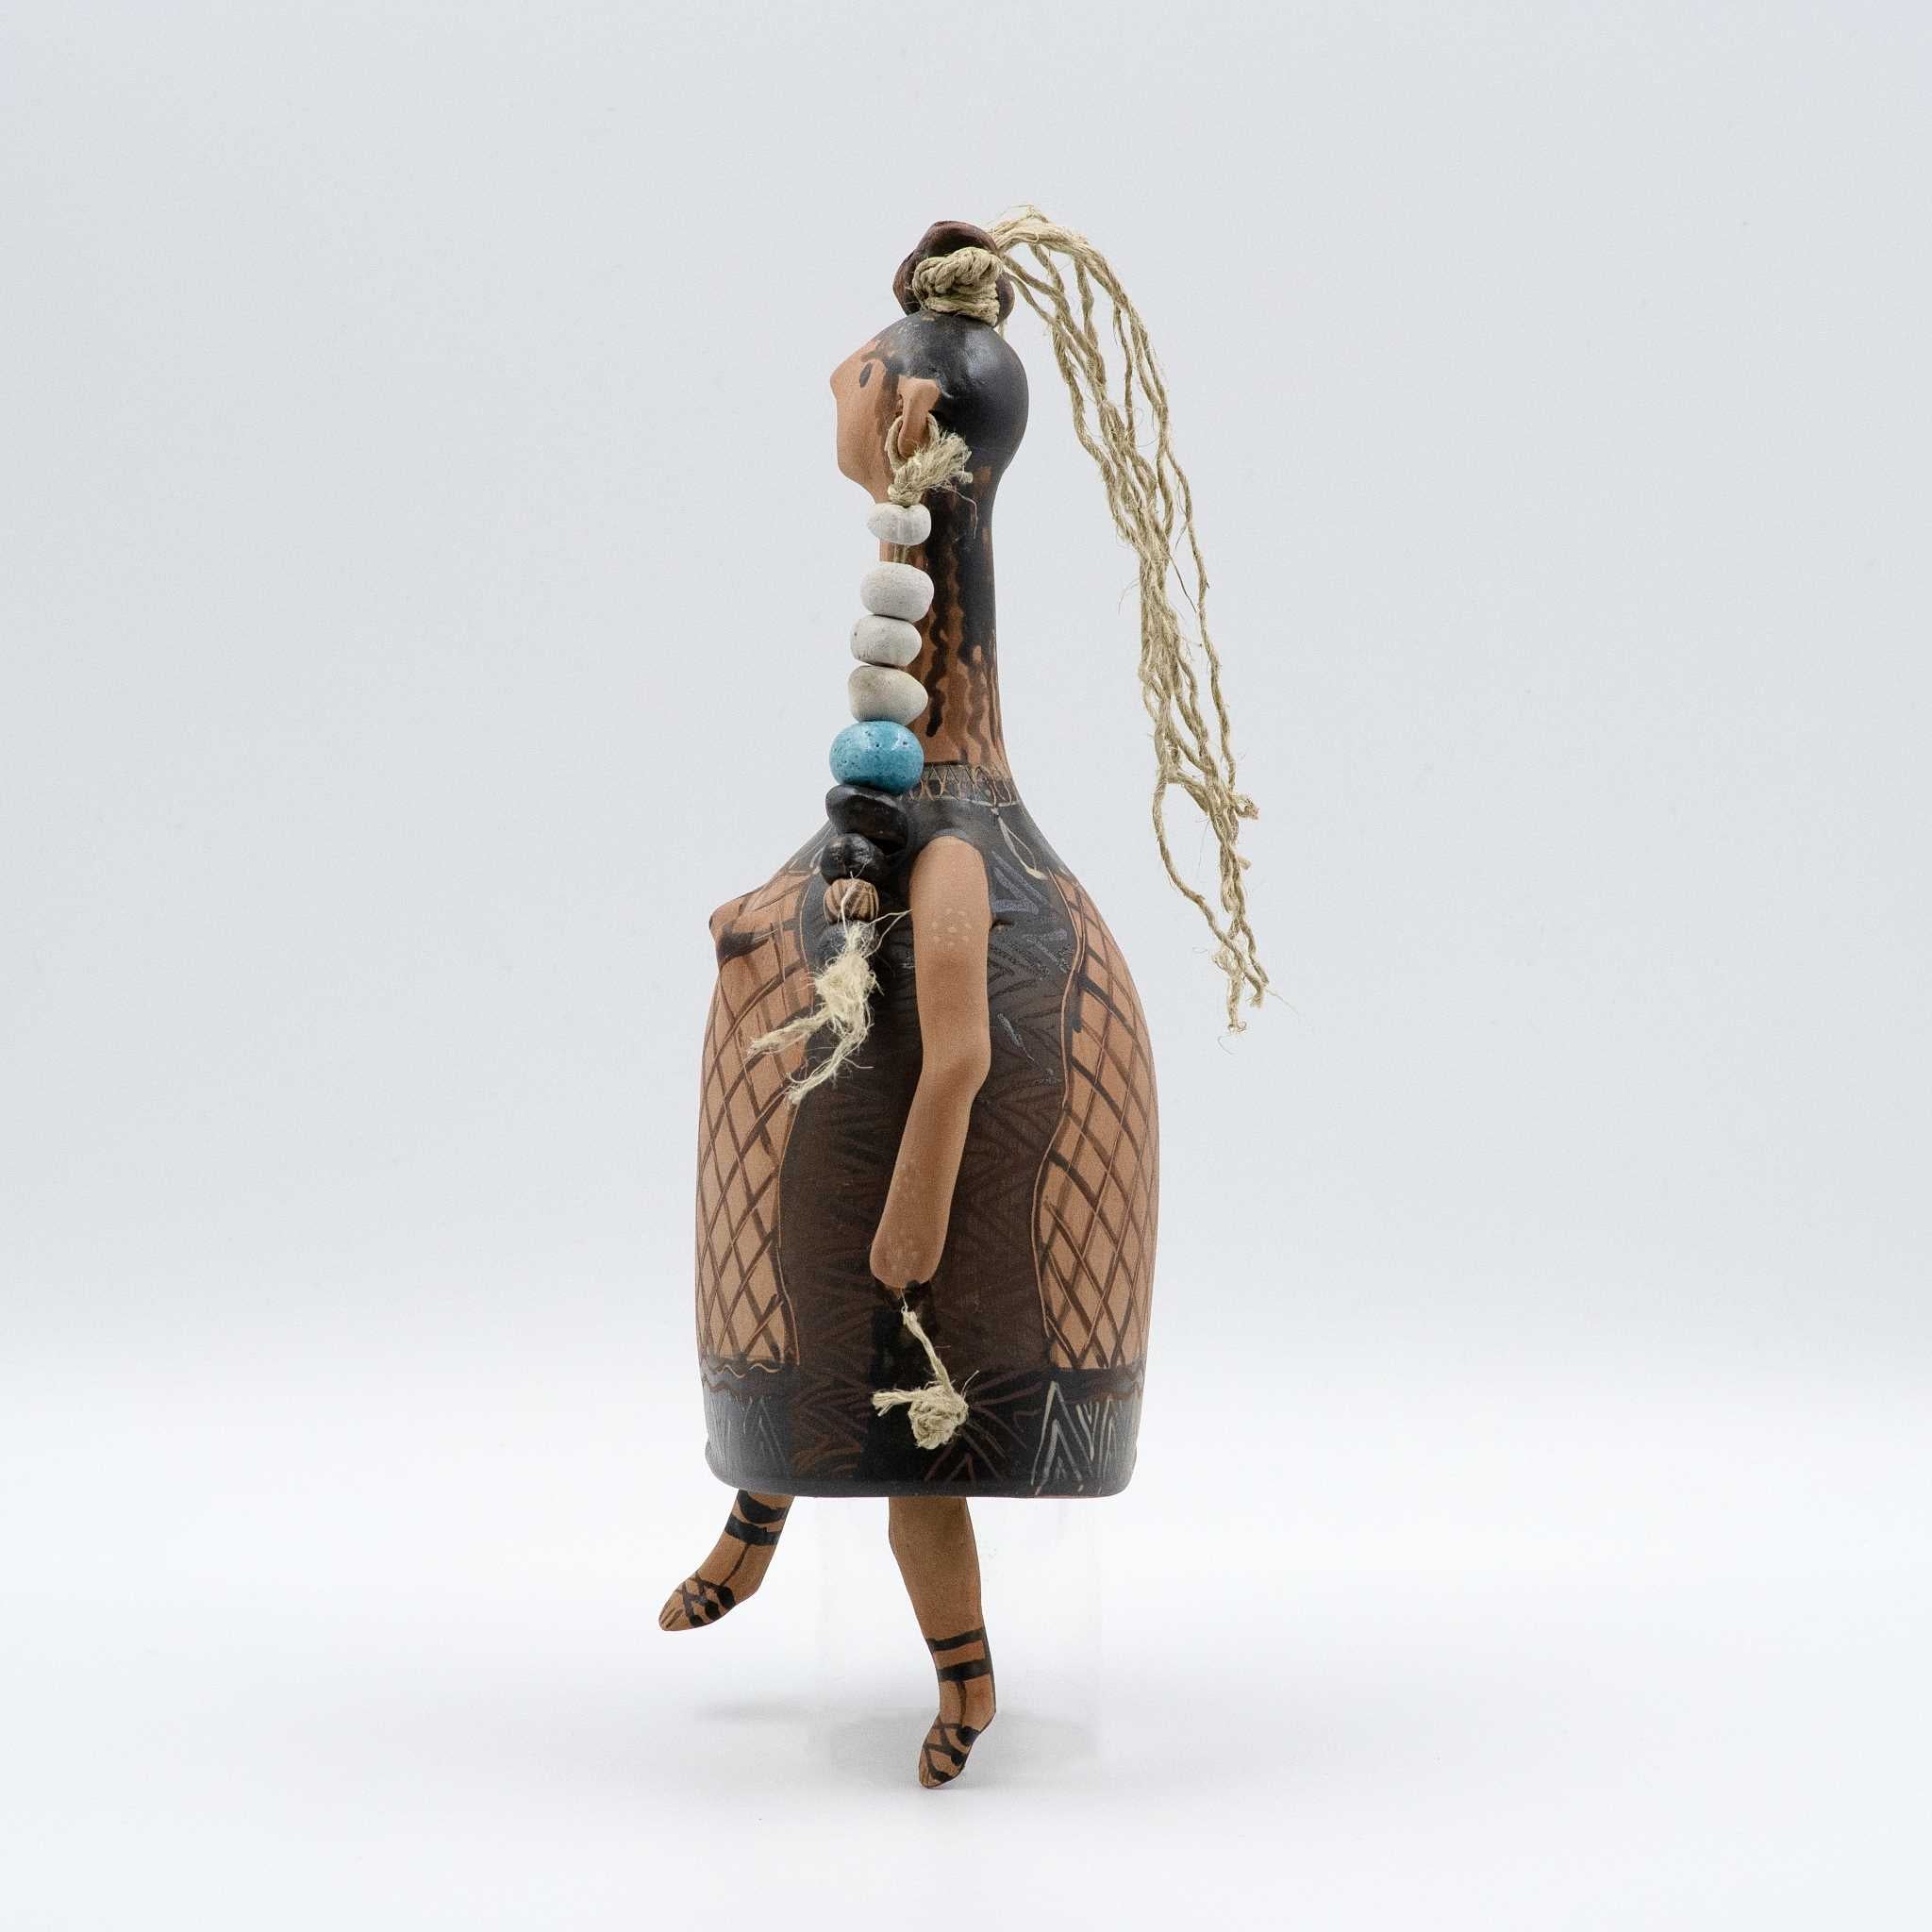 Thetis bell-shaped plangona doll